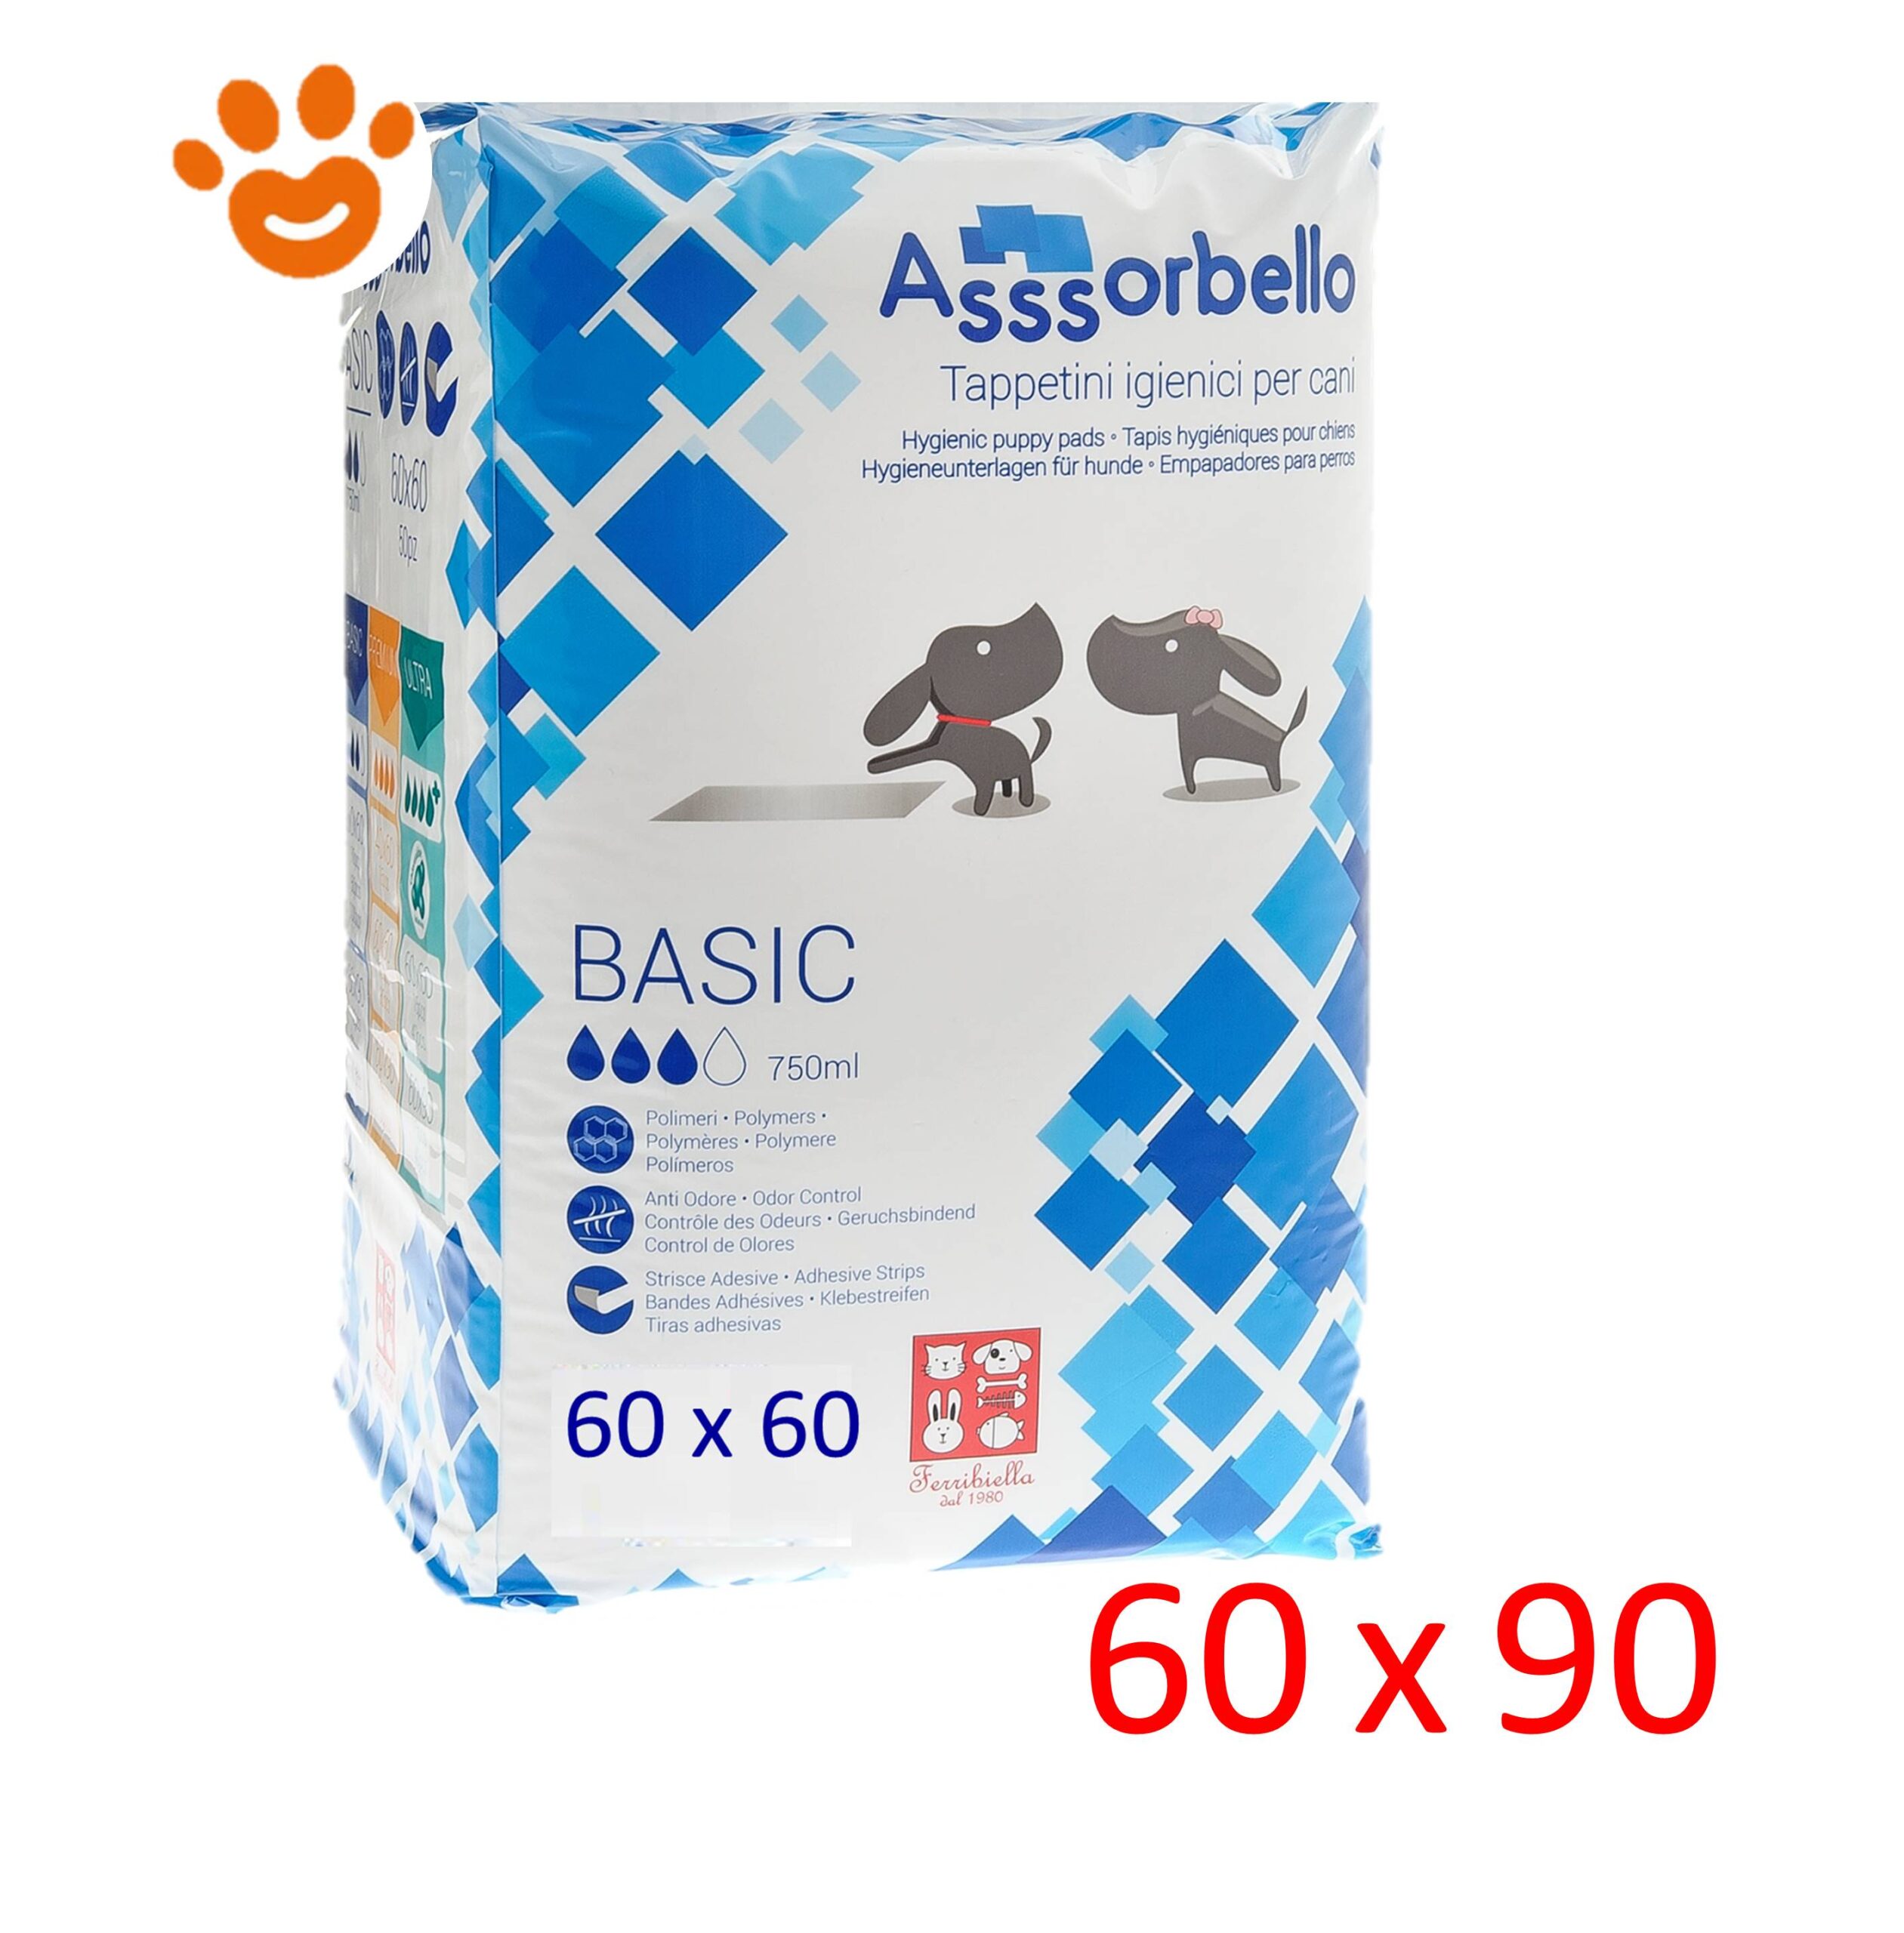 Ferribiella Assorbello BASIC Tappetini Assorbenti per cani 60x90